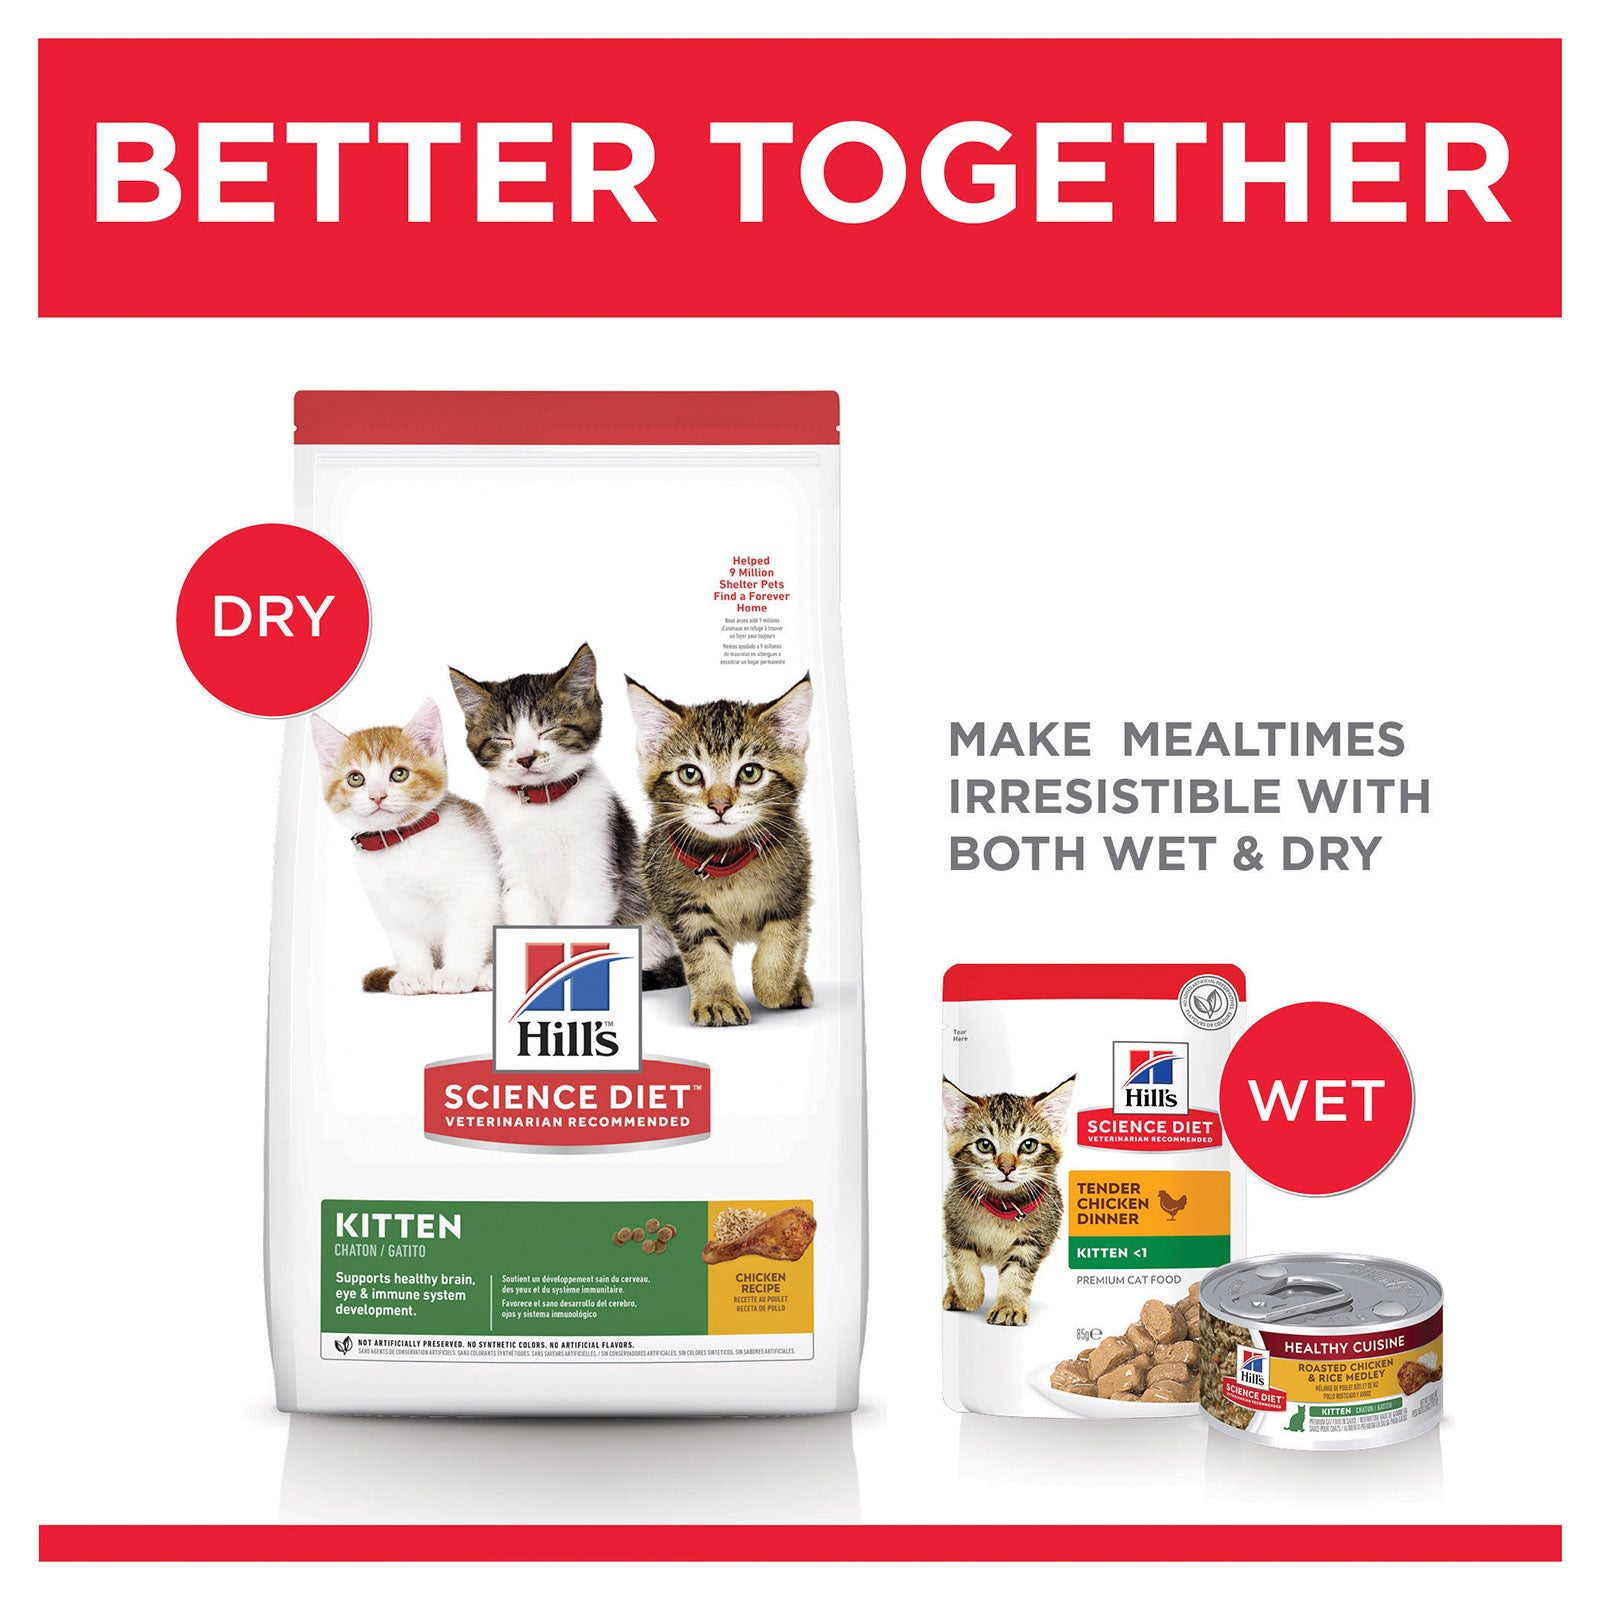 Hill's Science Diet Cat Food Kitten